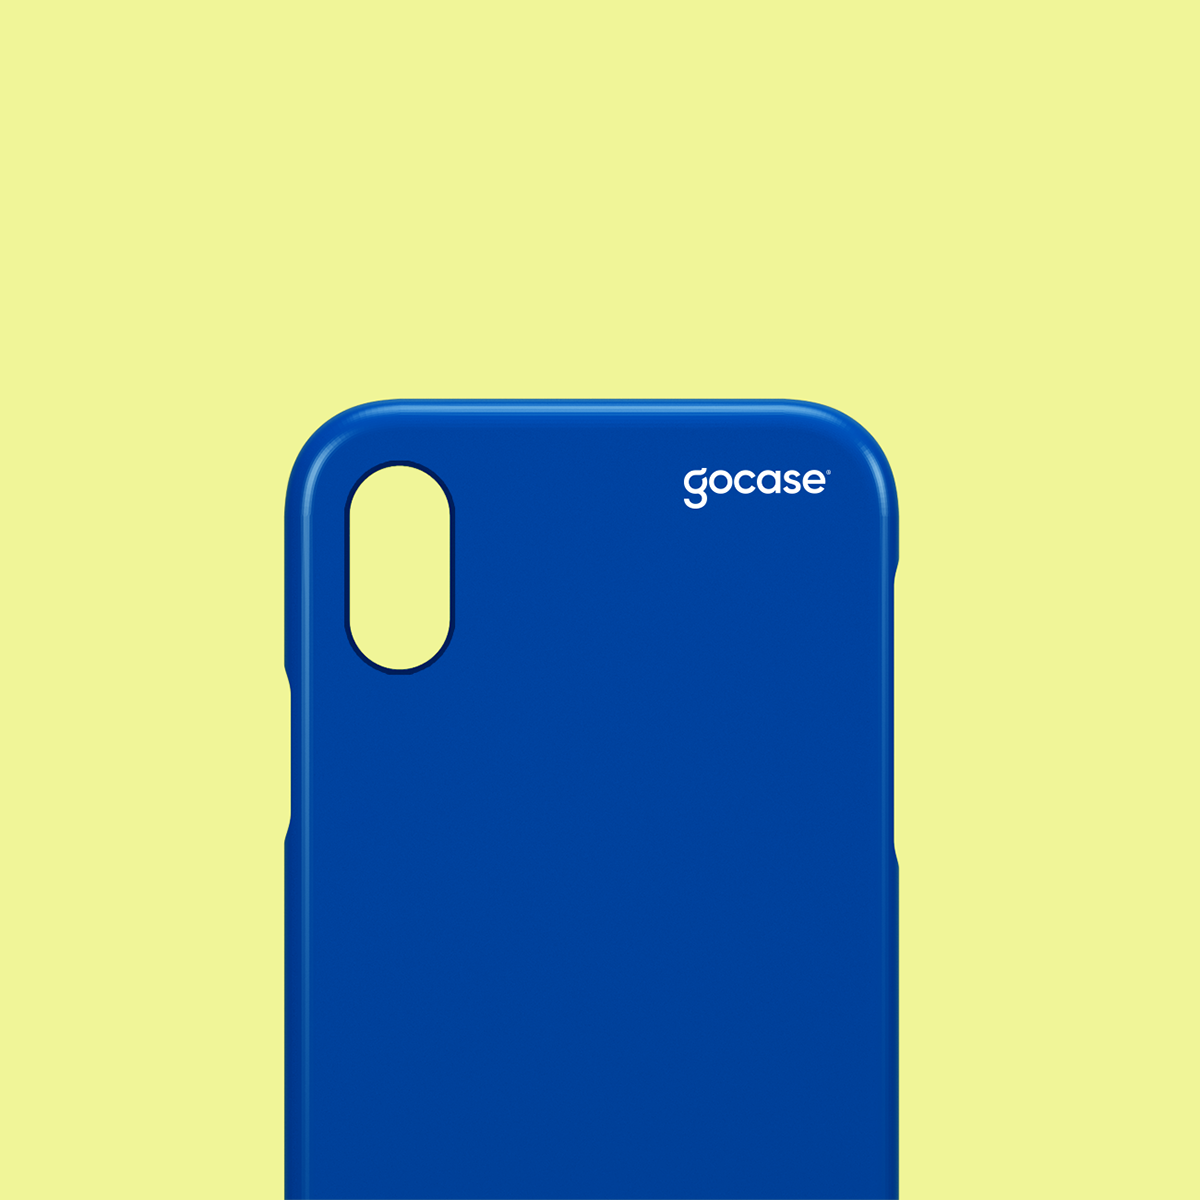 iphone配件品牌Gocase视觉识别设计